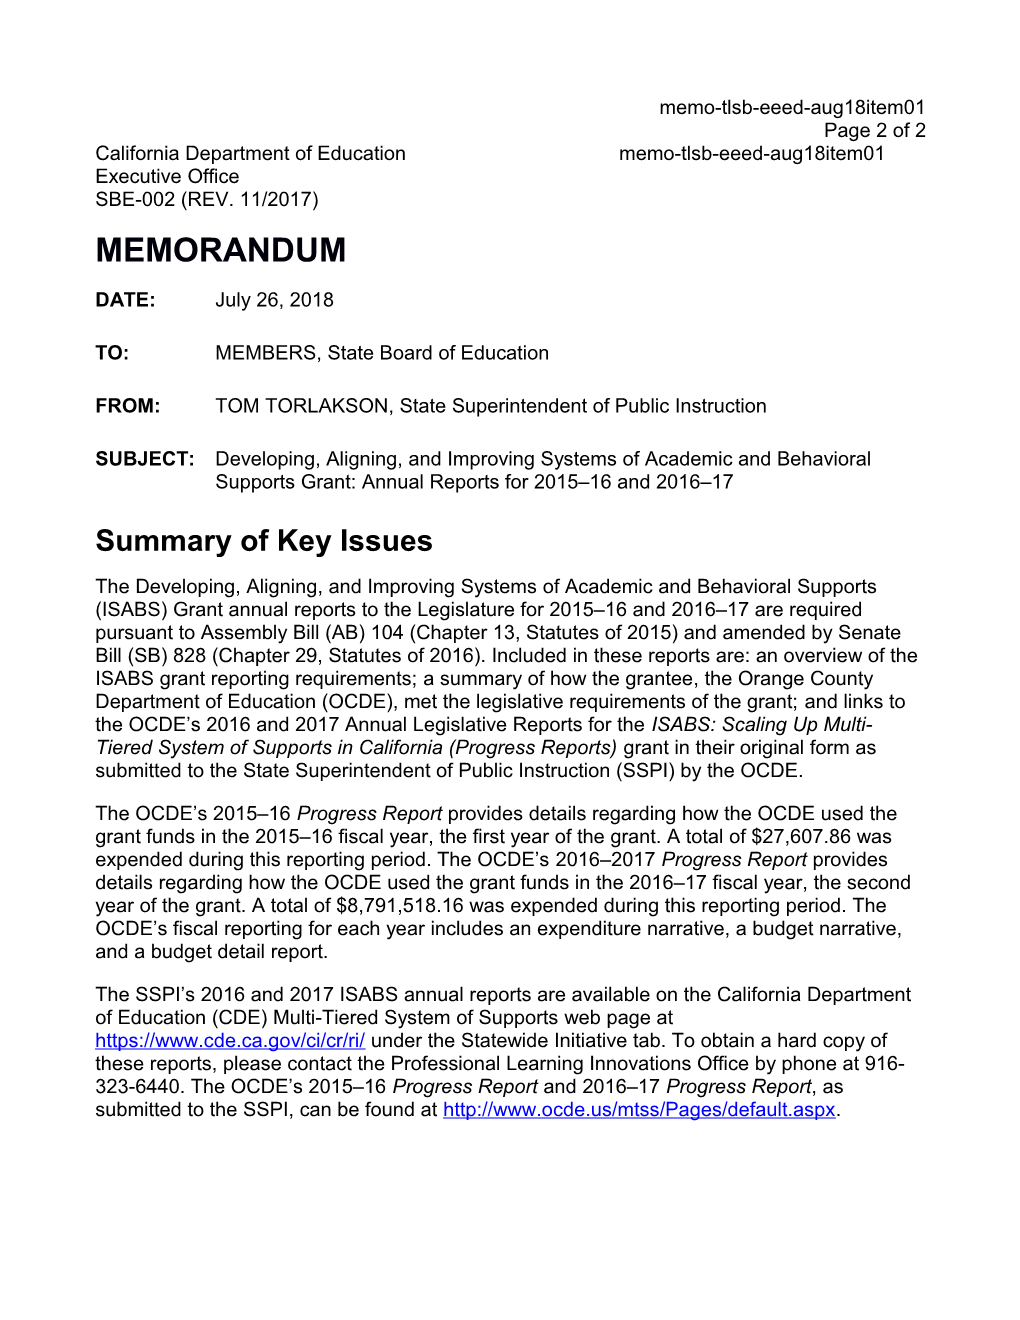 August 2018 Memo TLSB EEED Item 01 - Information Memorandum (CA State Board of Education)